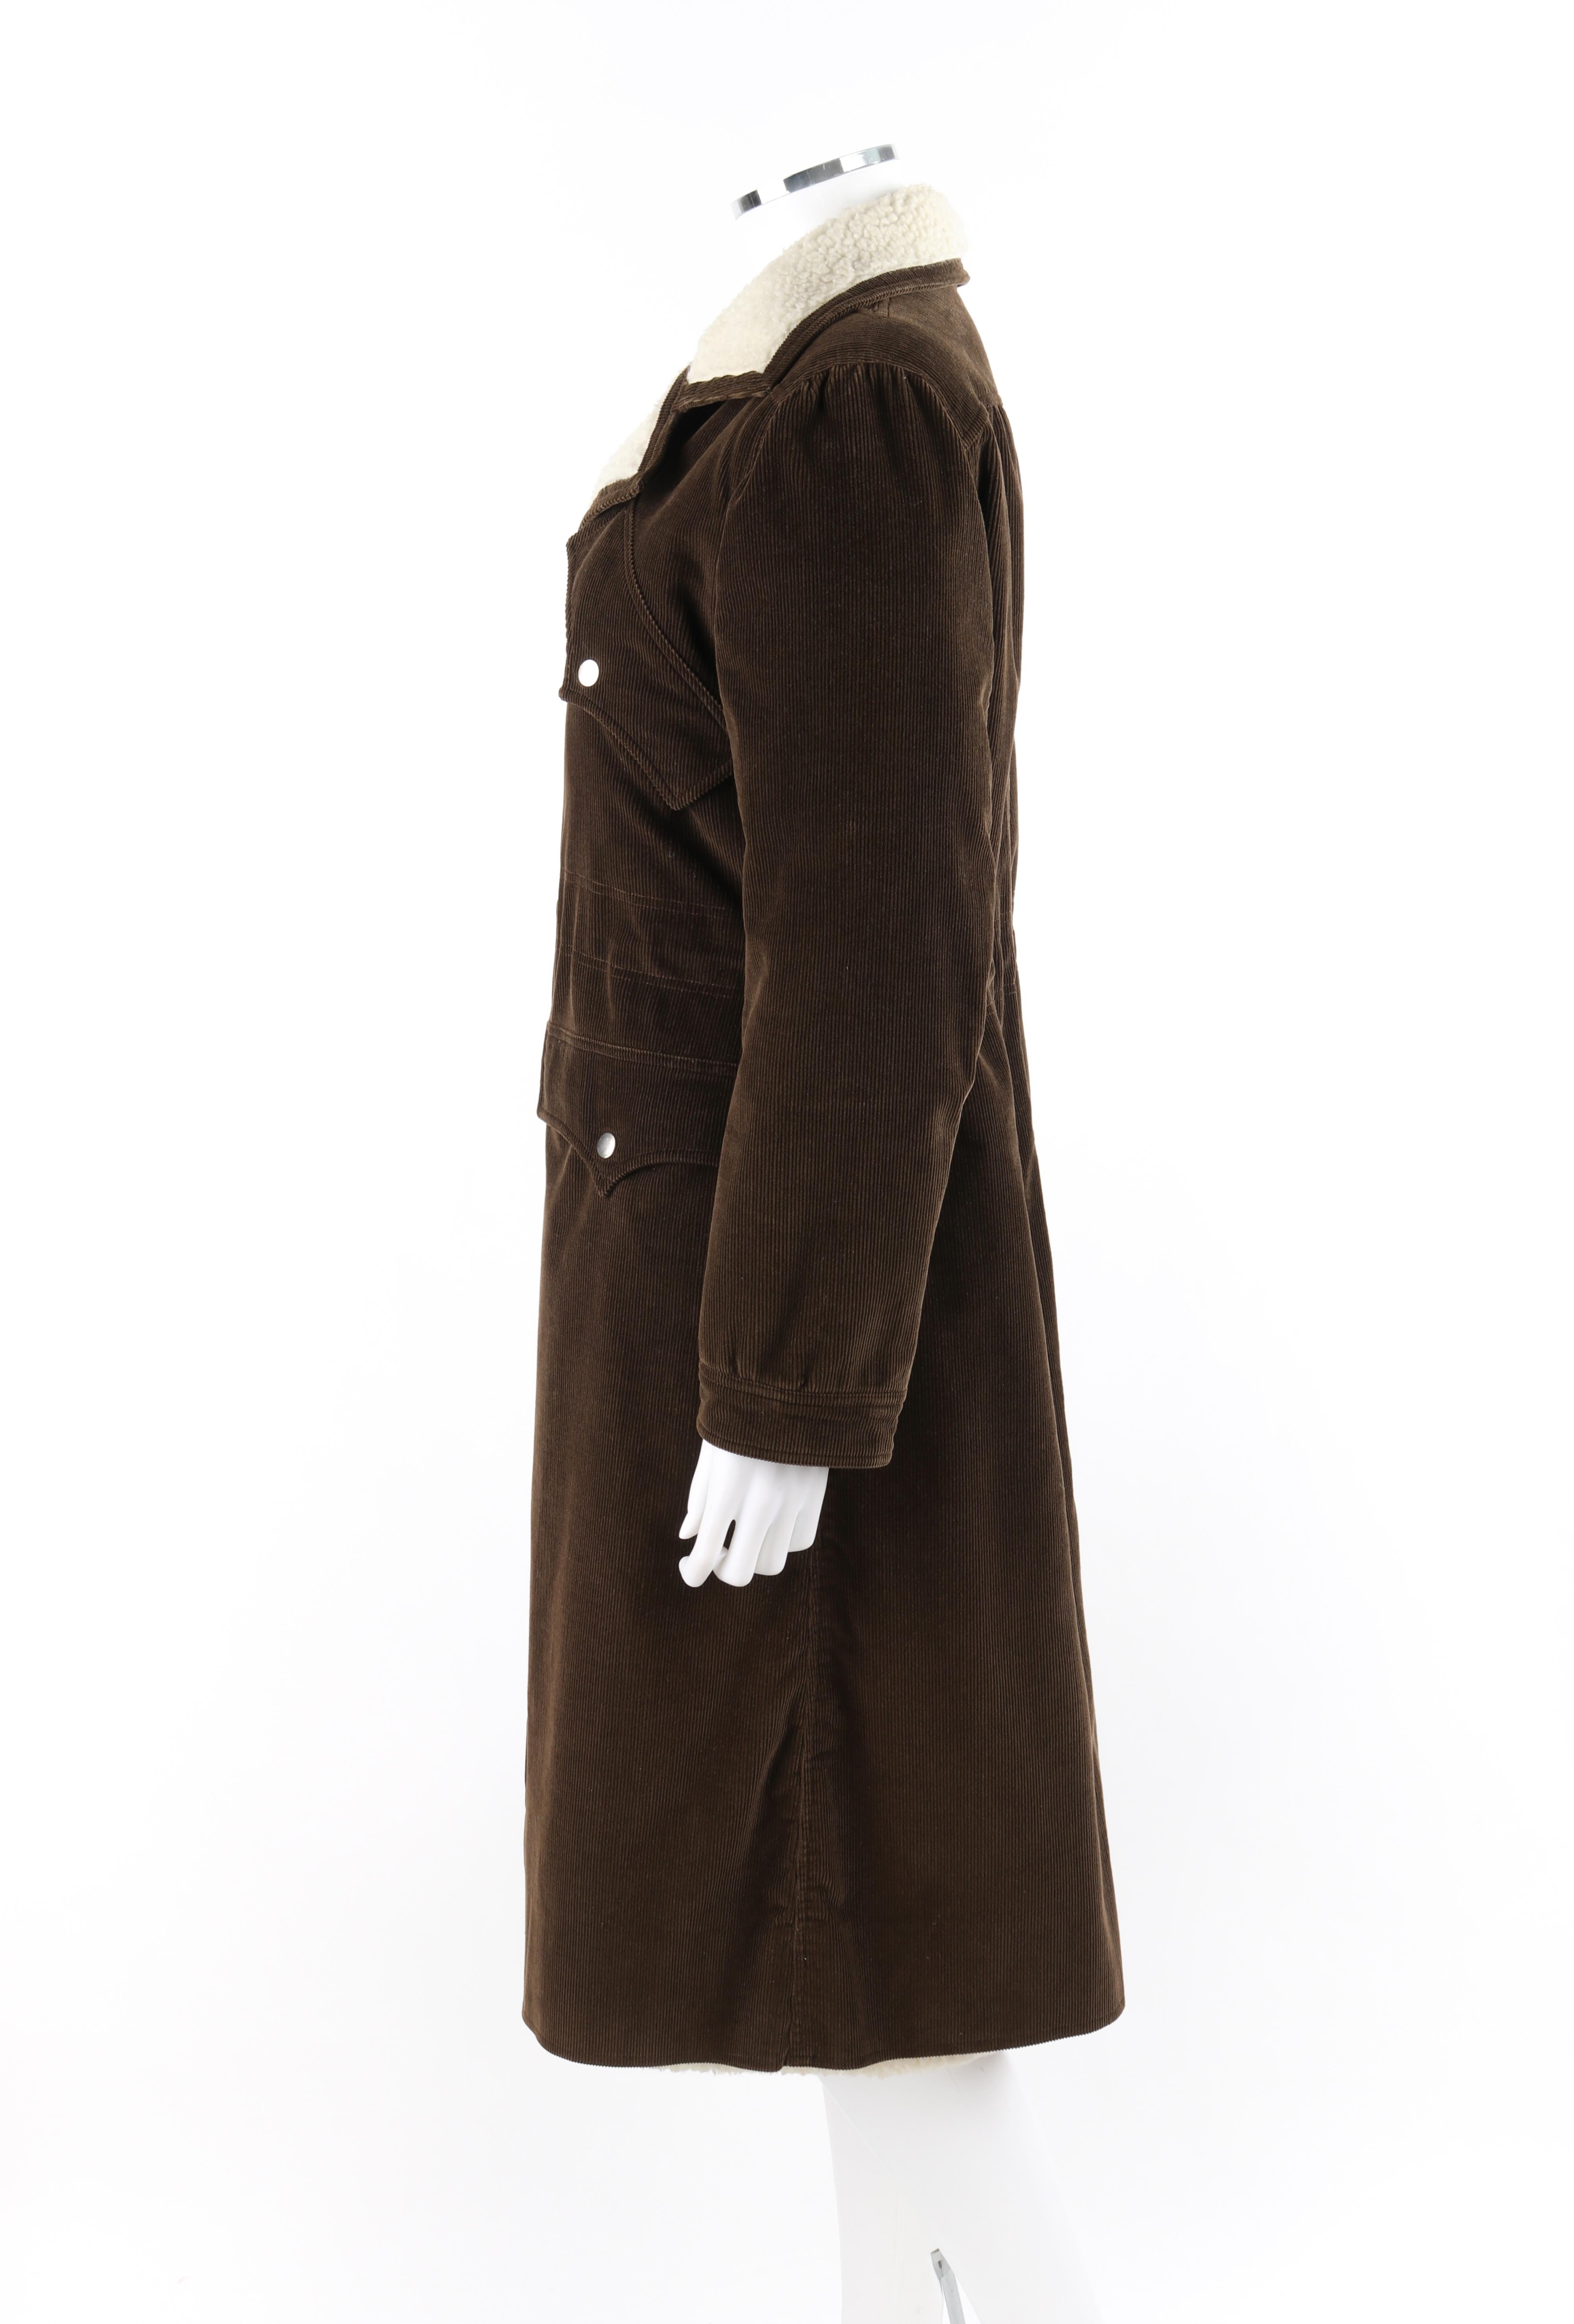 COURREGES Couture Future c.1970’s Brown Corduroy Cinched Waist Long Coat Jacket For Sale 2